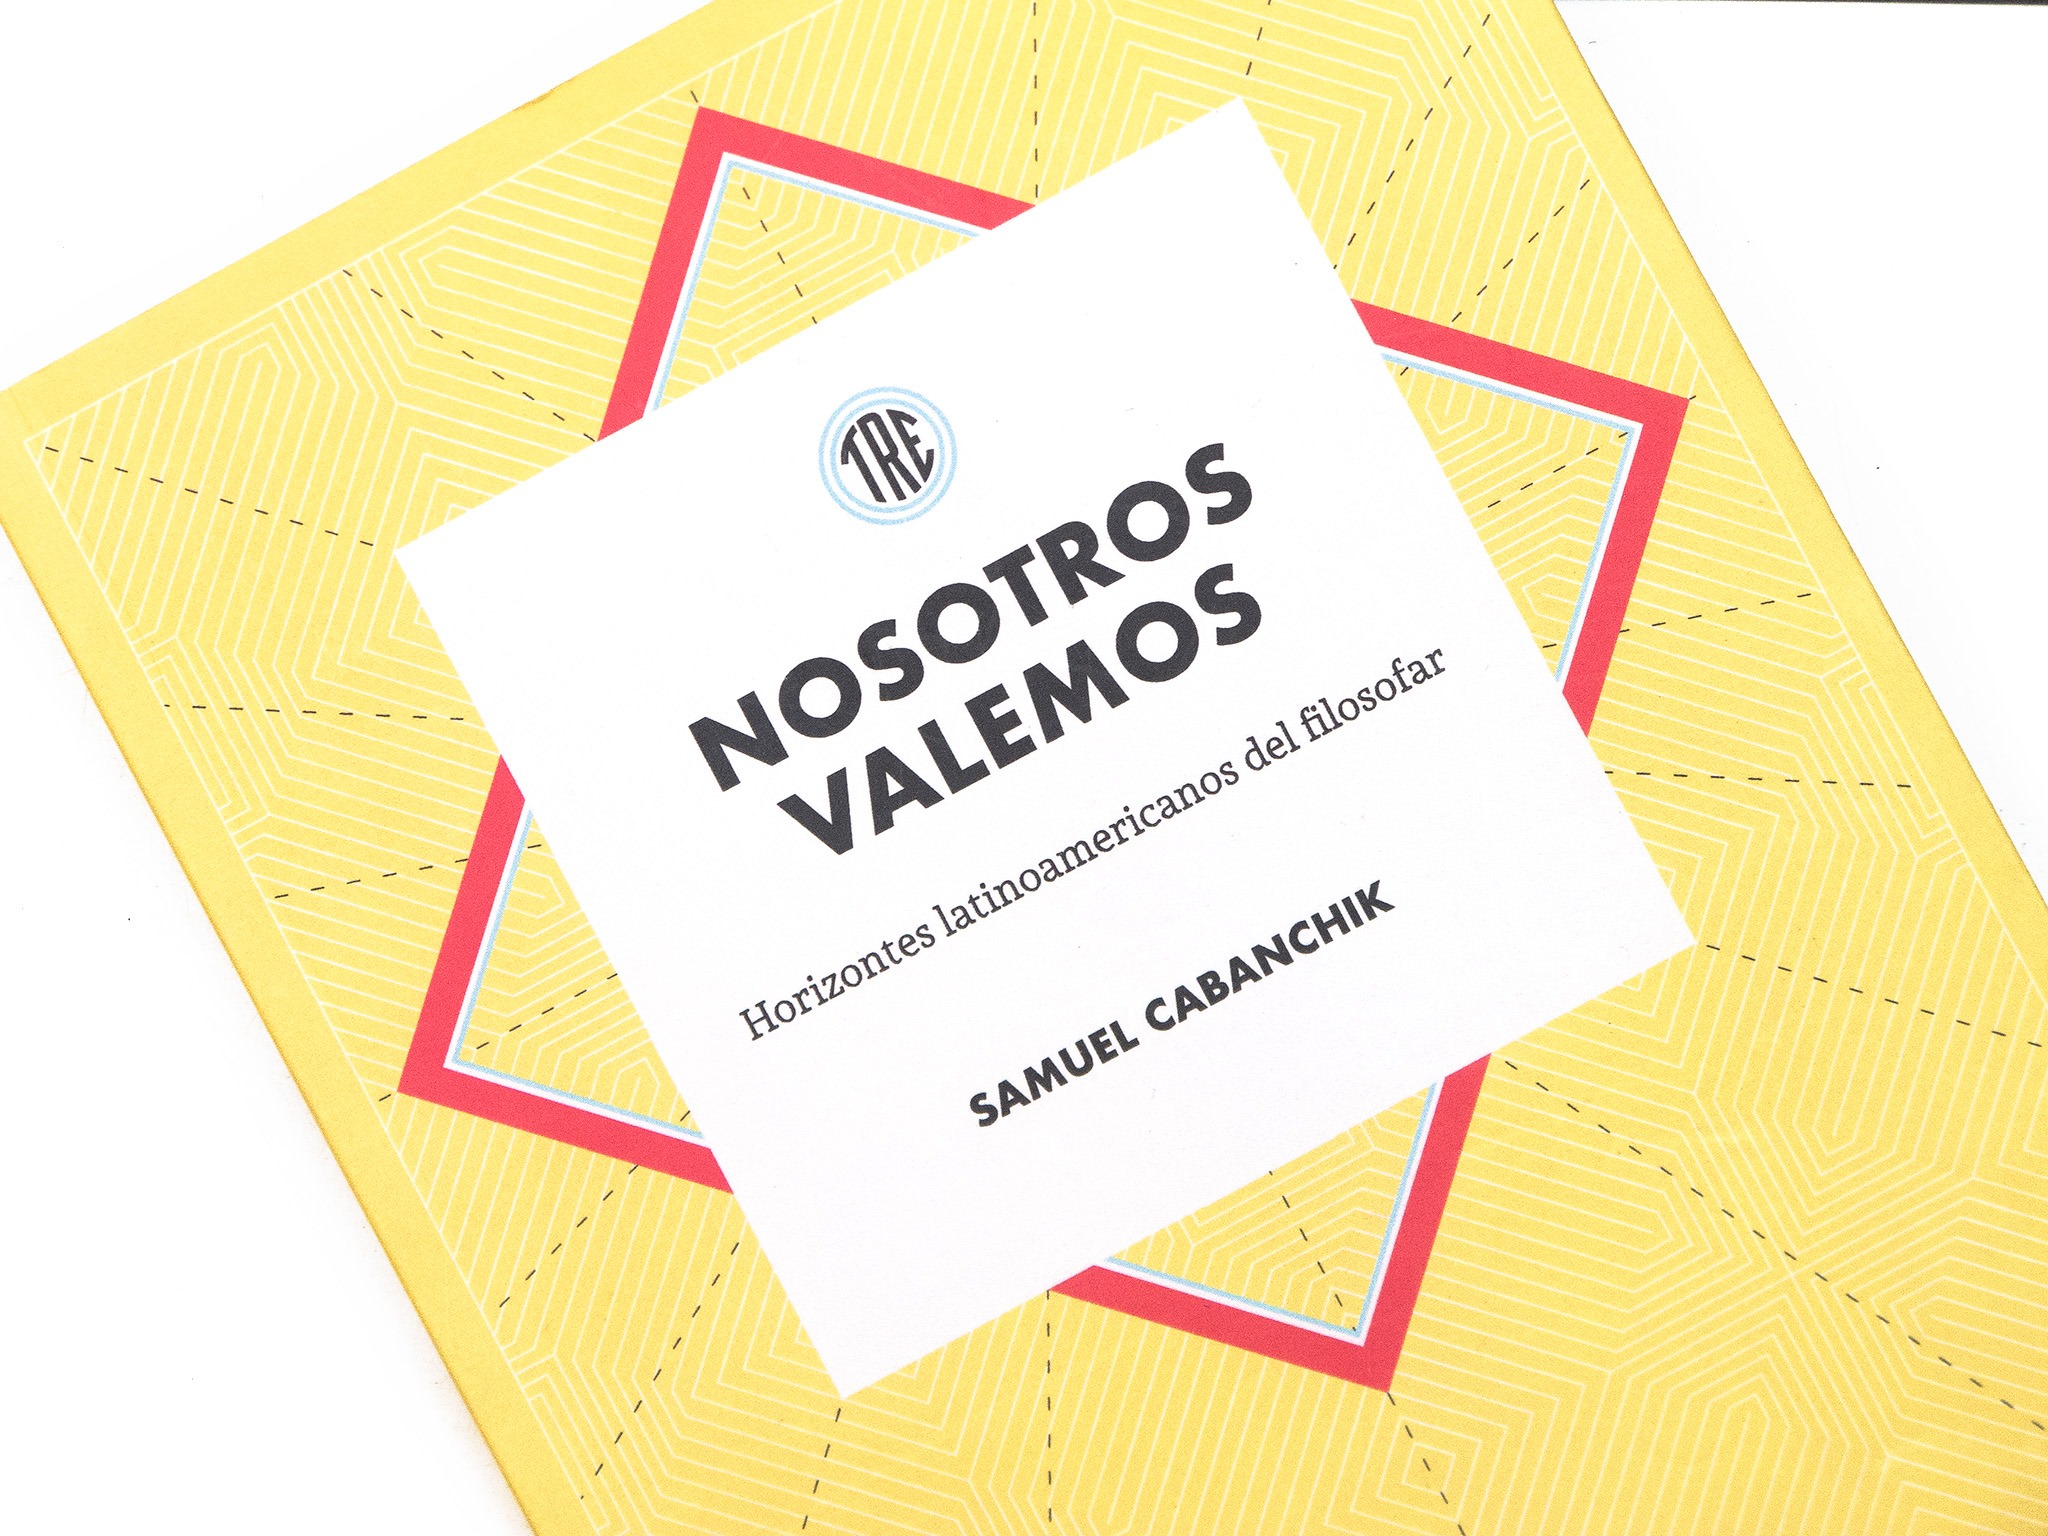 Nosotros Valemos. Horizontes latinoamericanos del filosofar by Samuel Cabanchik